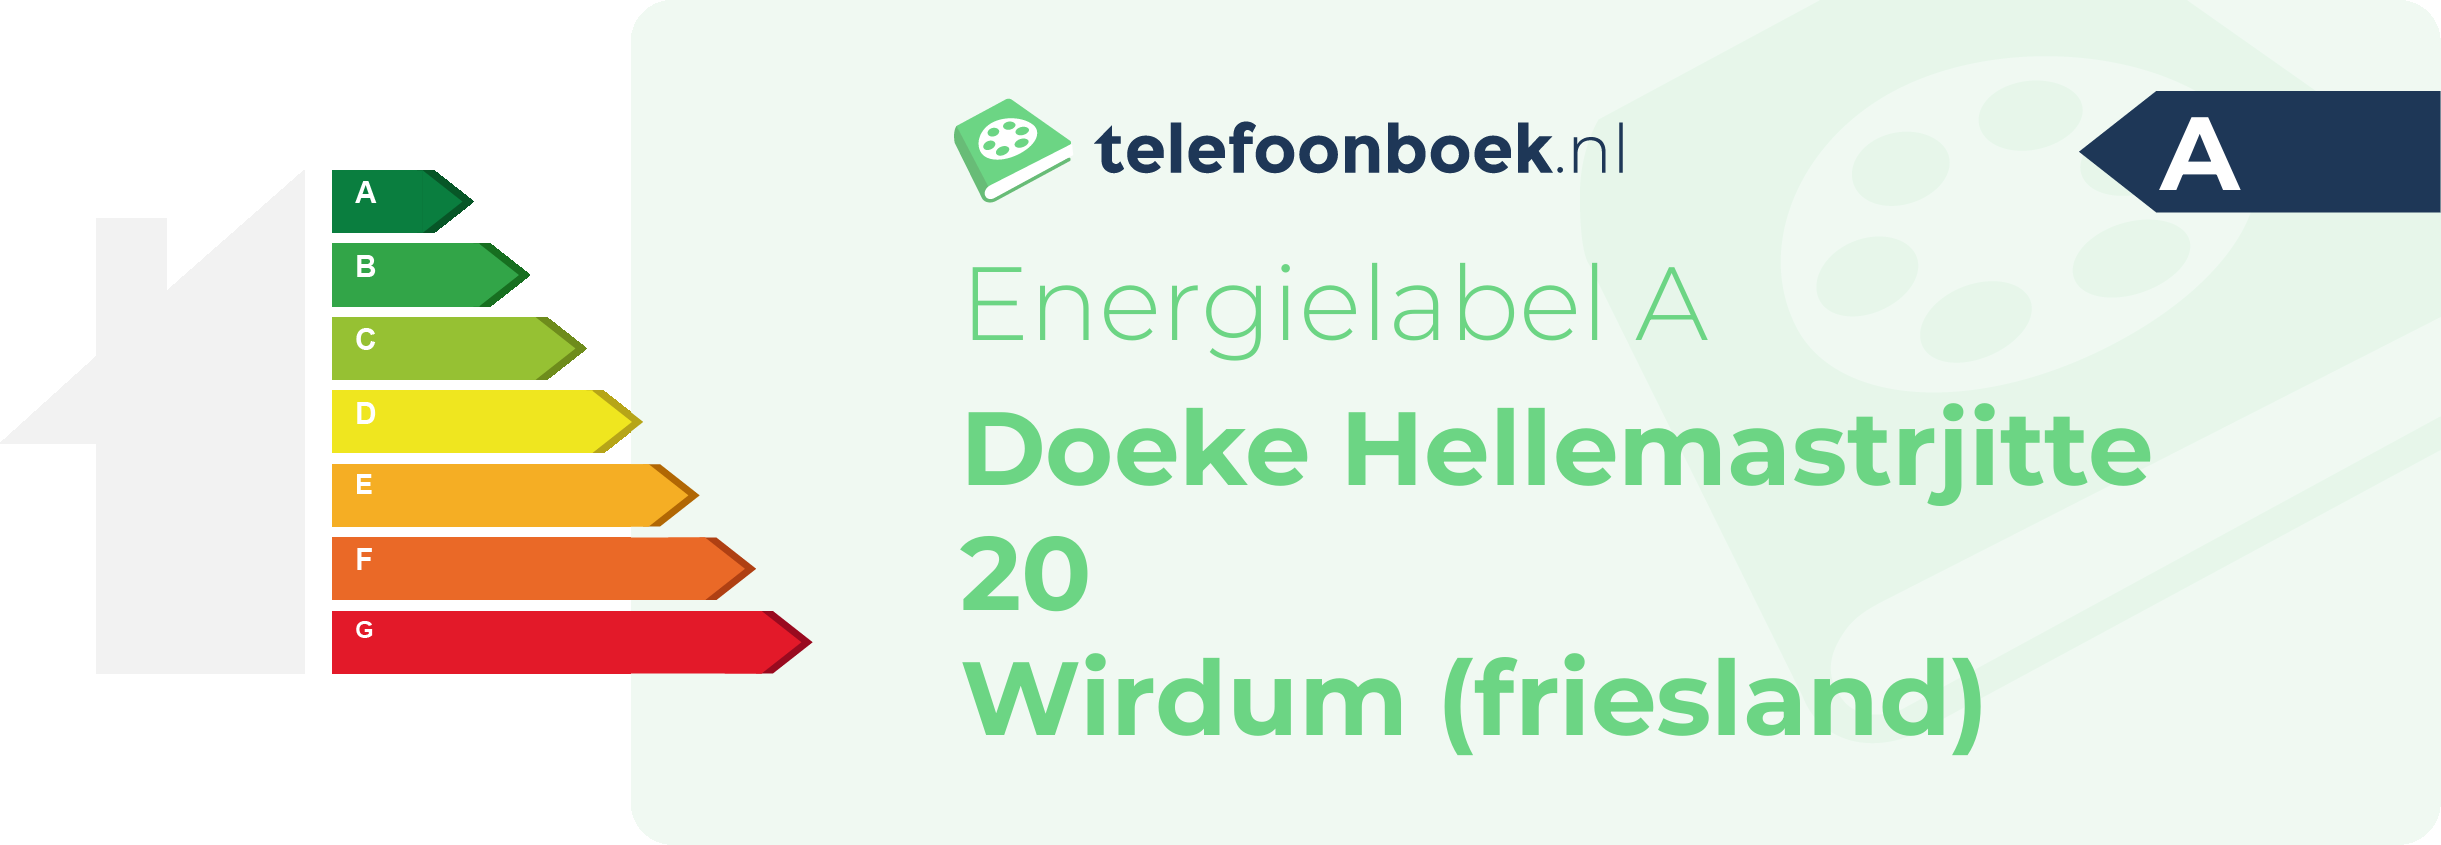 Energielabel Doeke Hellemastrjitte 20 Wirdum (Friesland)